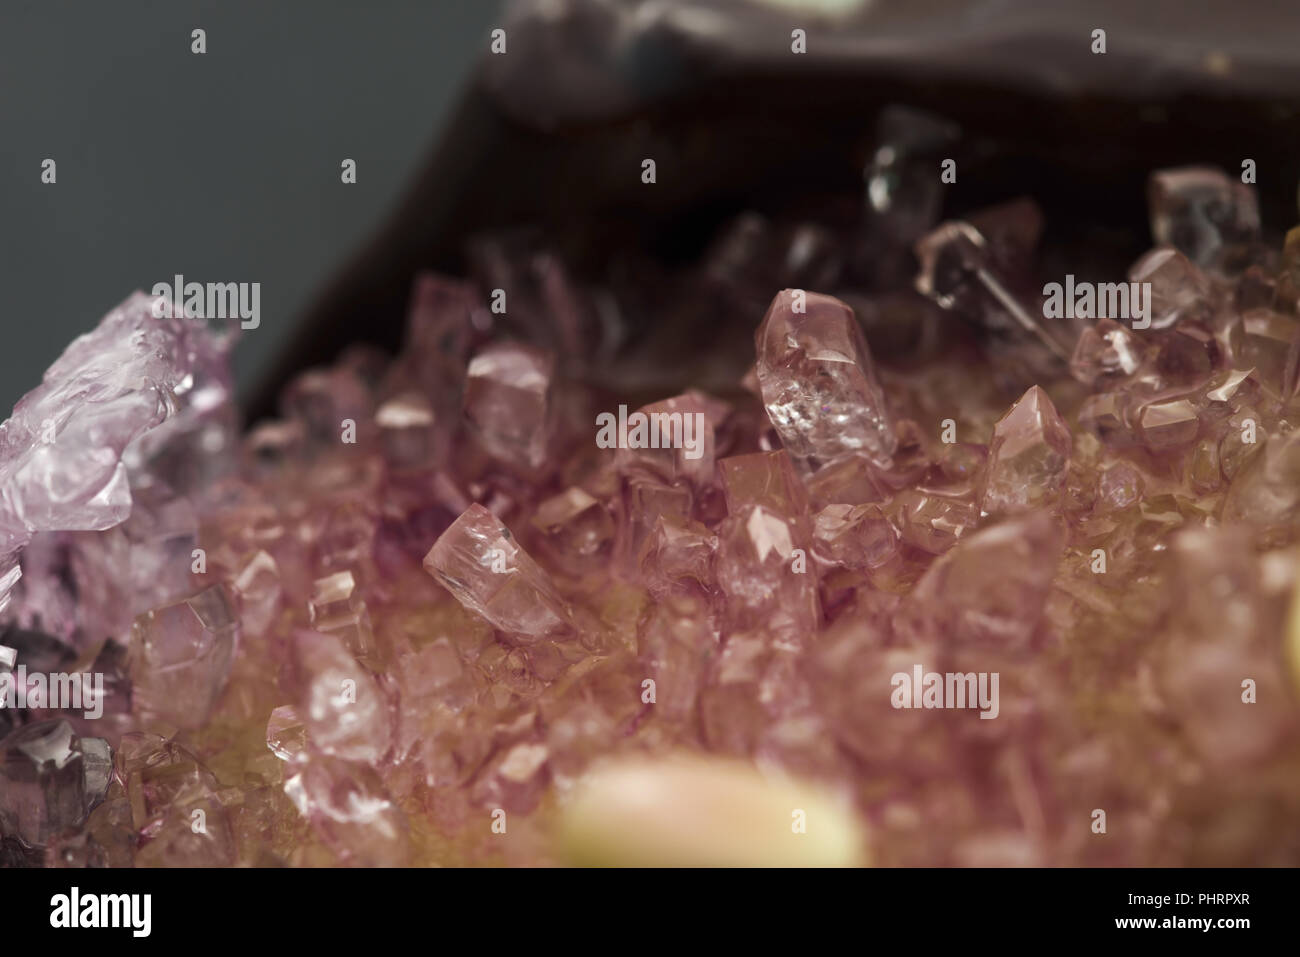 Edible Sugar Crystals on black background Stock Photo